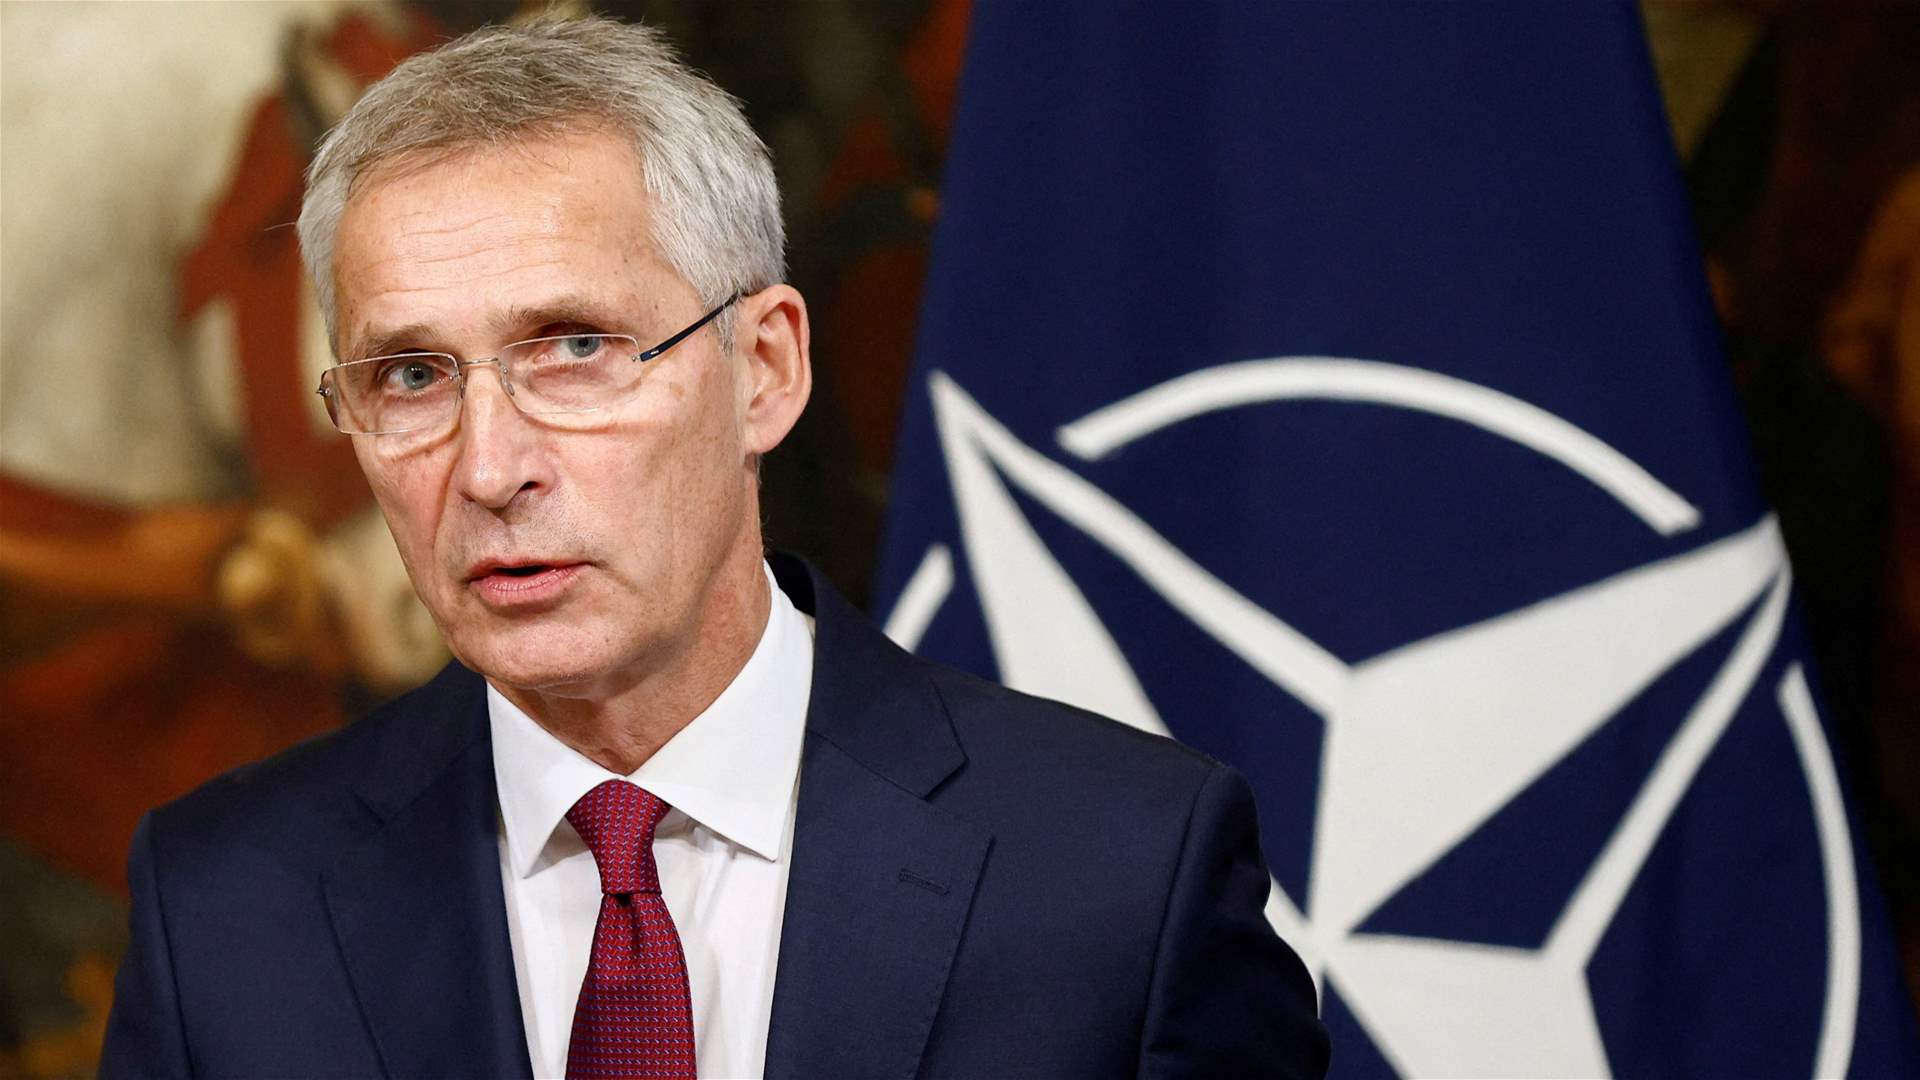 NATO agrees to extend Stoltenberg mandate: diplomats